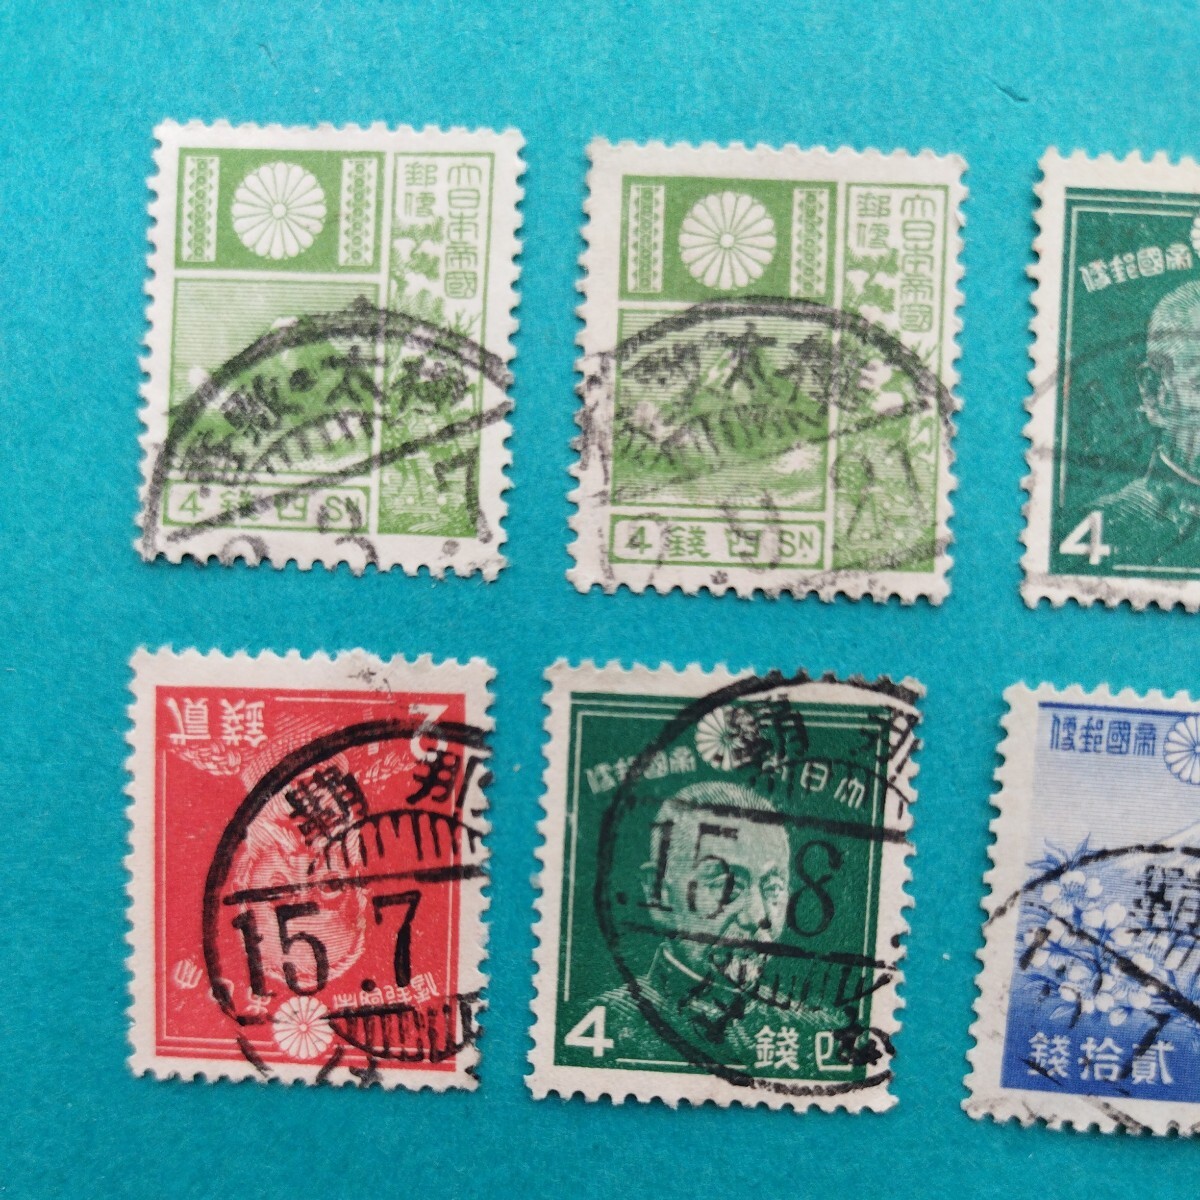 * Sakhalin(Karafuto) Okinawa . seal collection * Fujishika stamp Showa era stamp Sakhalin(Karafuto) *.... taking Naha 